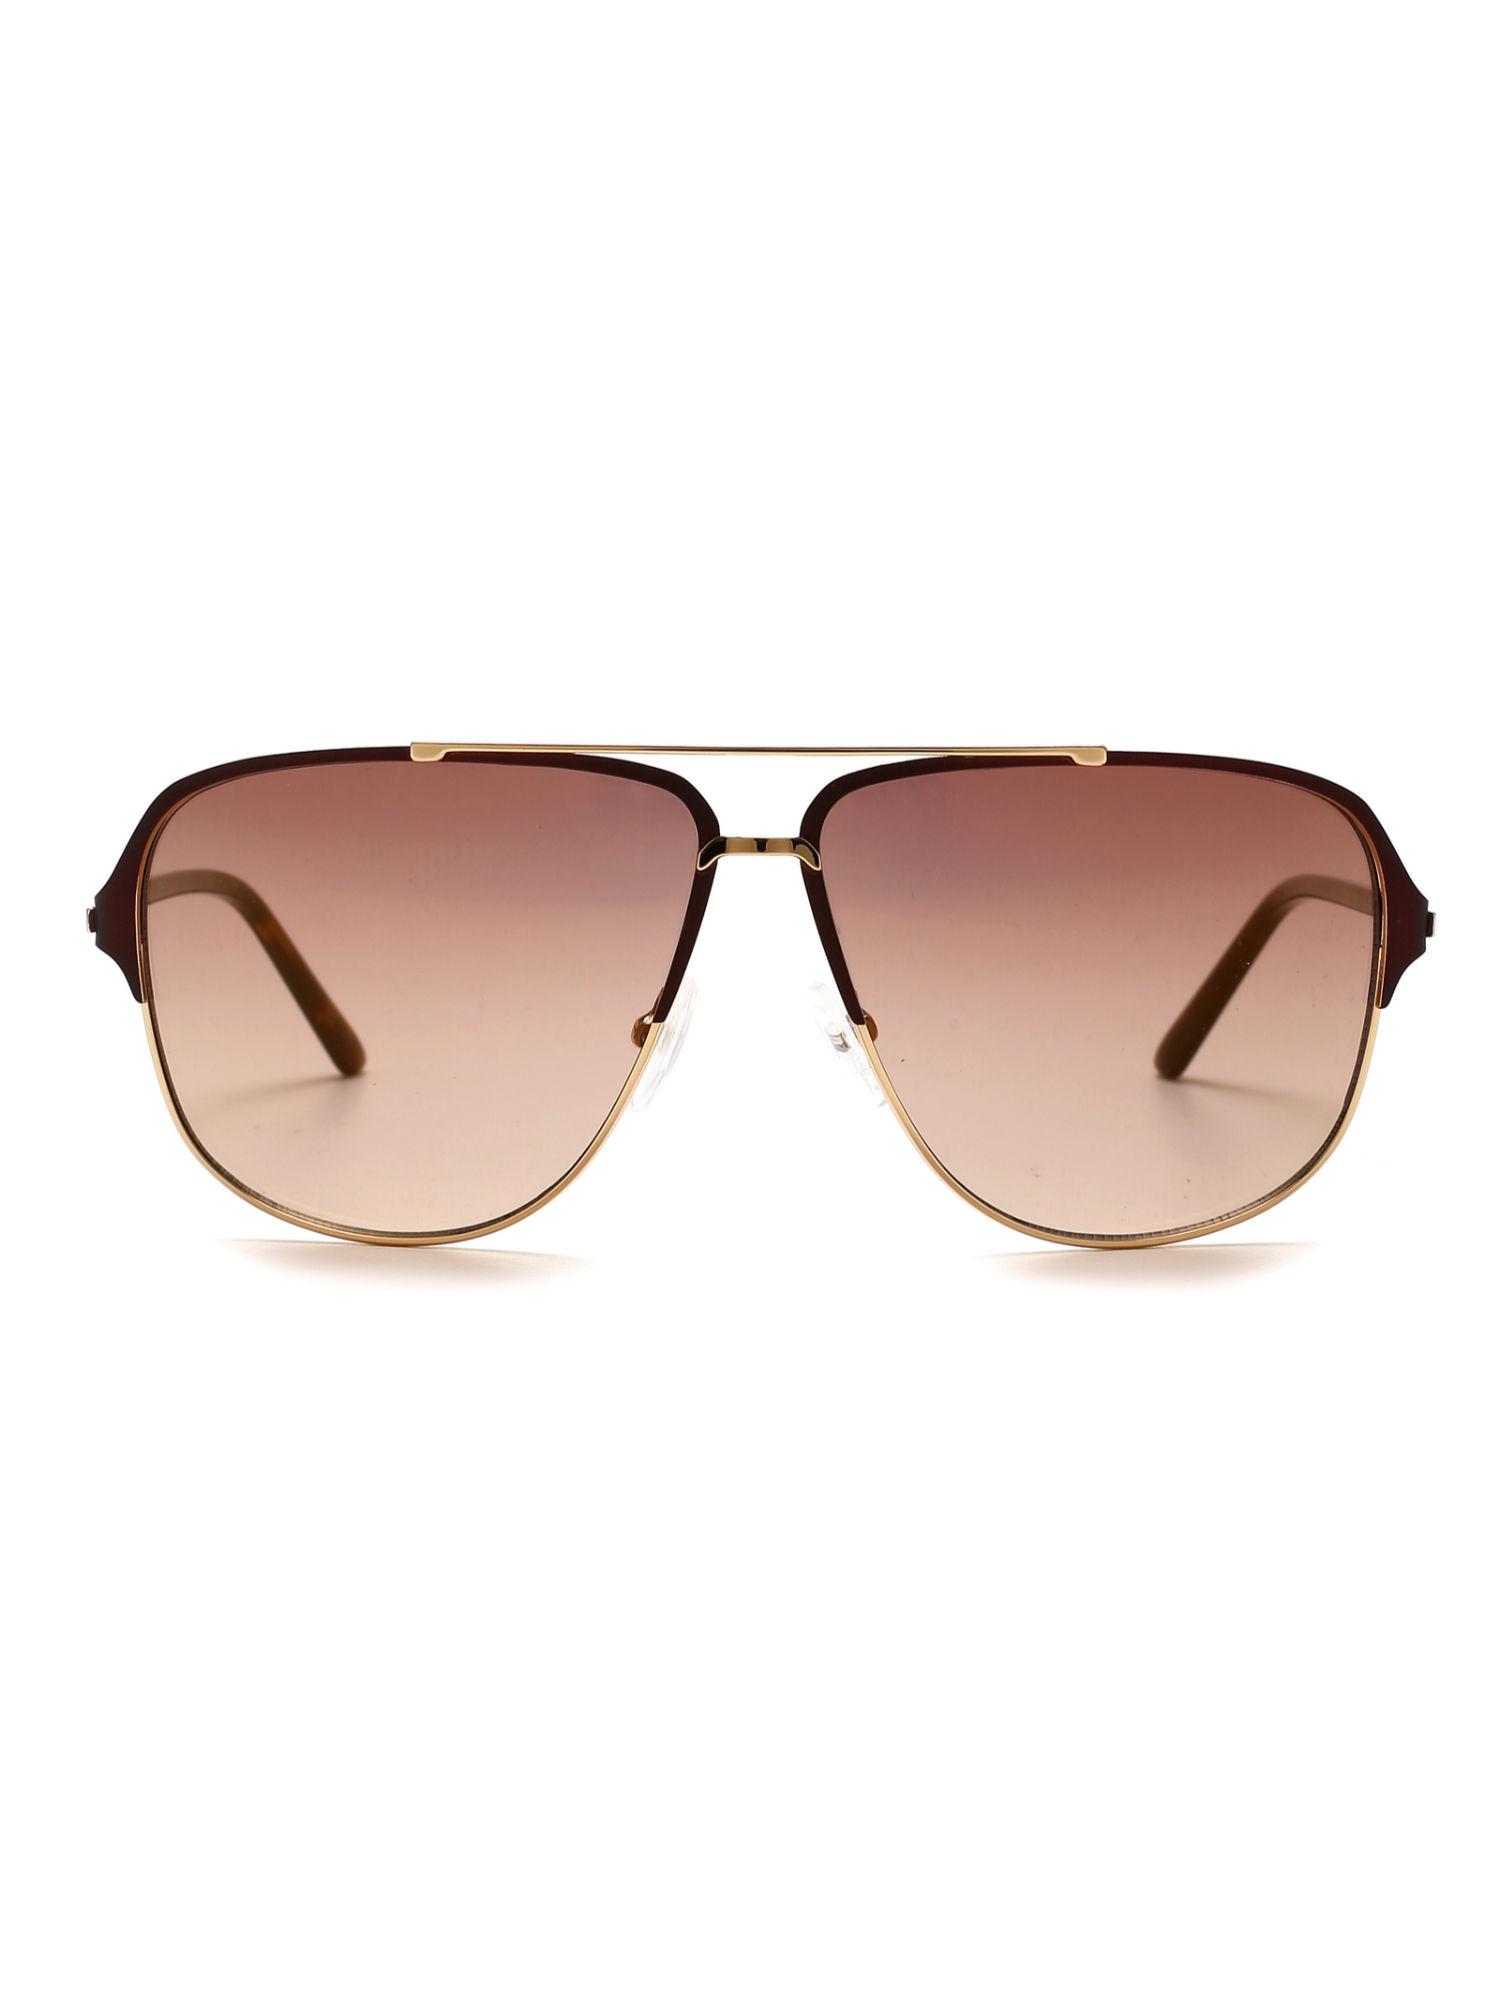 navigator-sunglasses-with-brown-lens-for-men